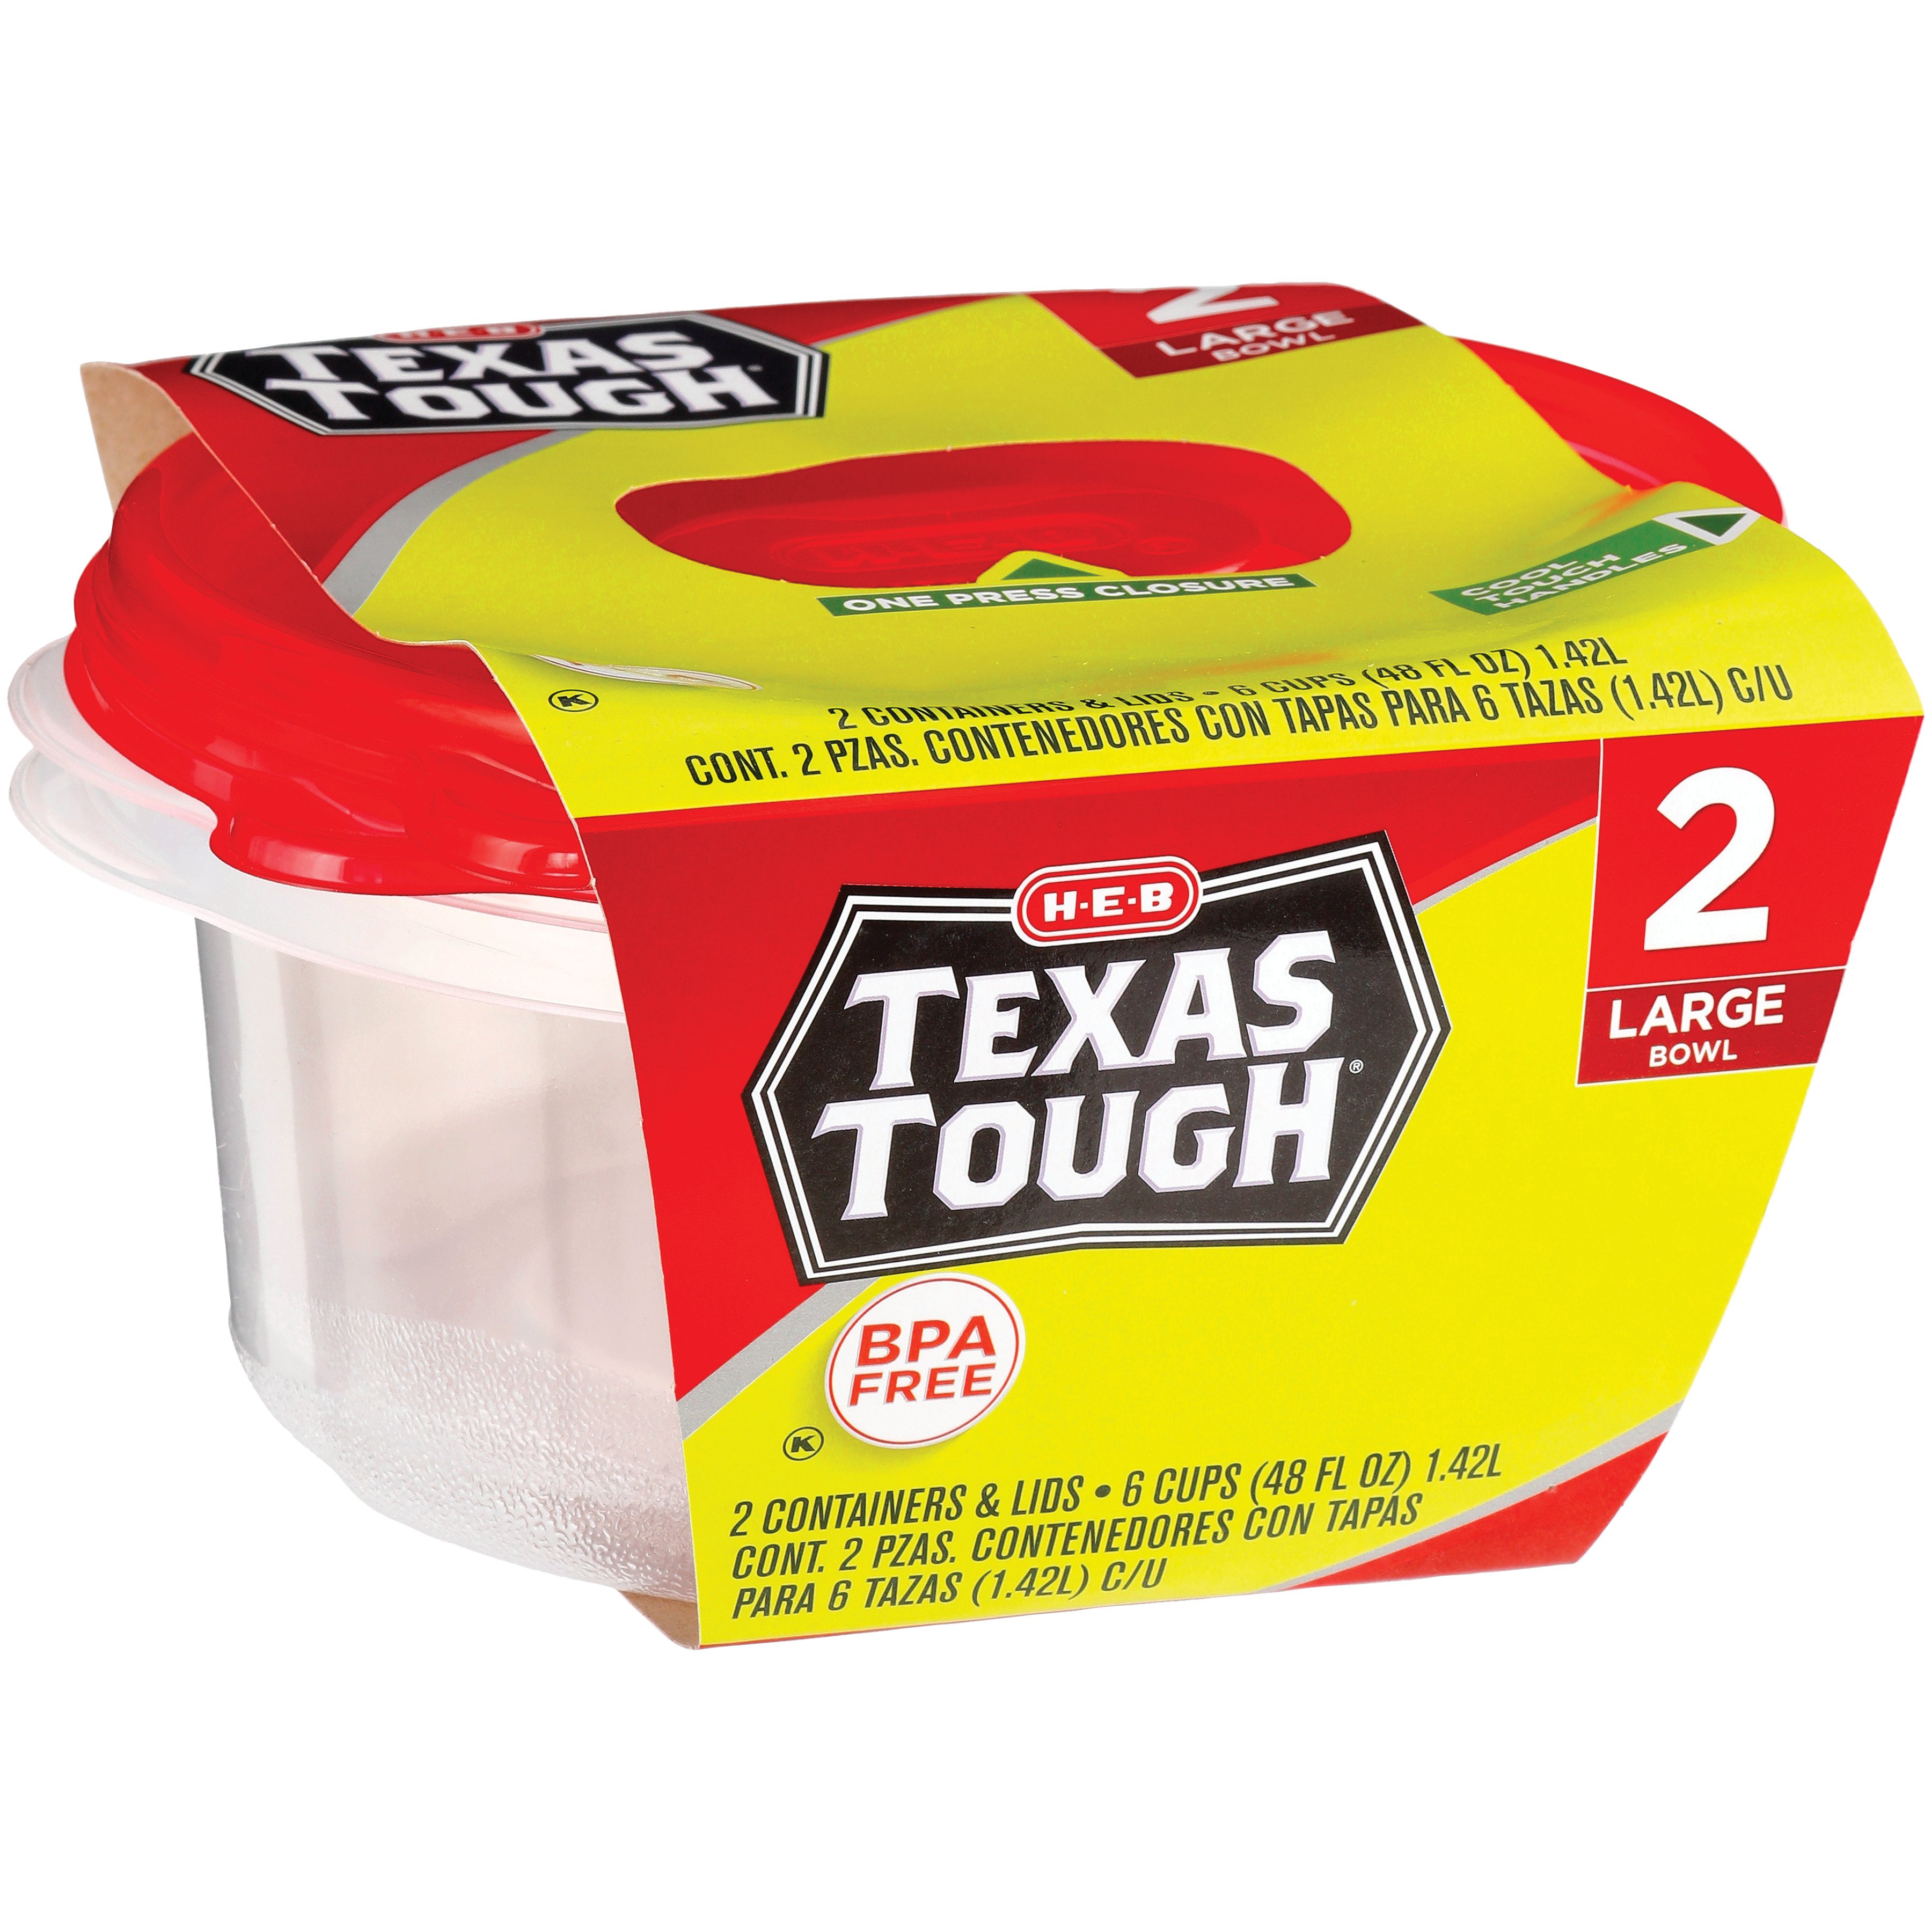 H-E-B Texas Tough Large Reusable Container Bowls with Lids